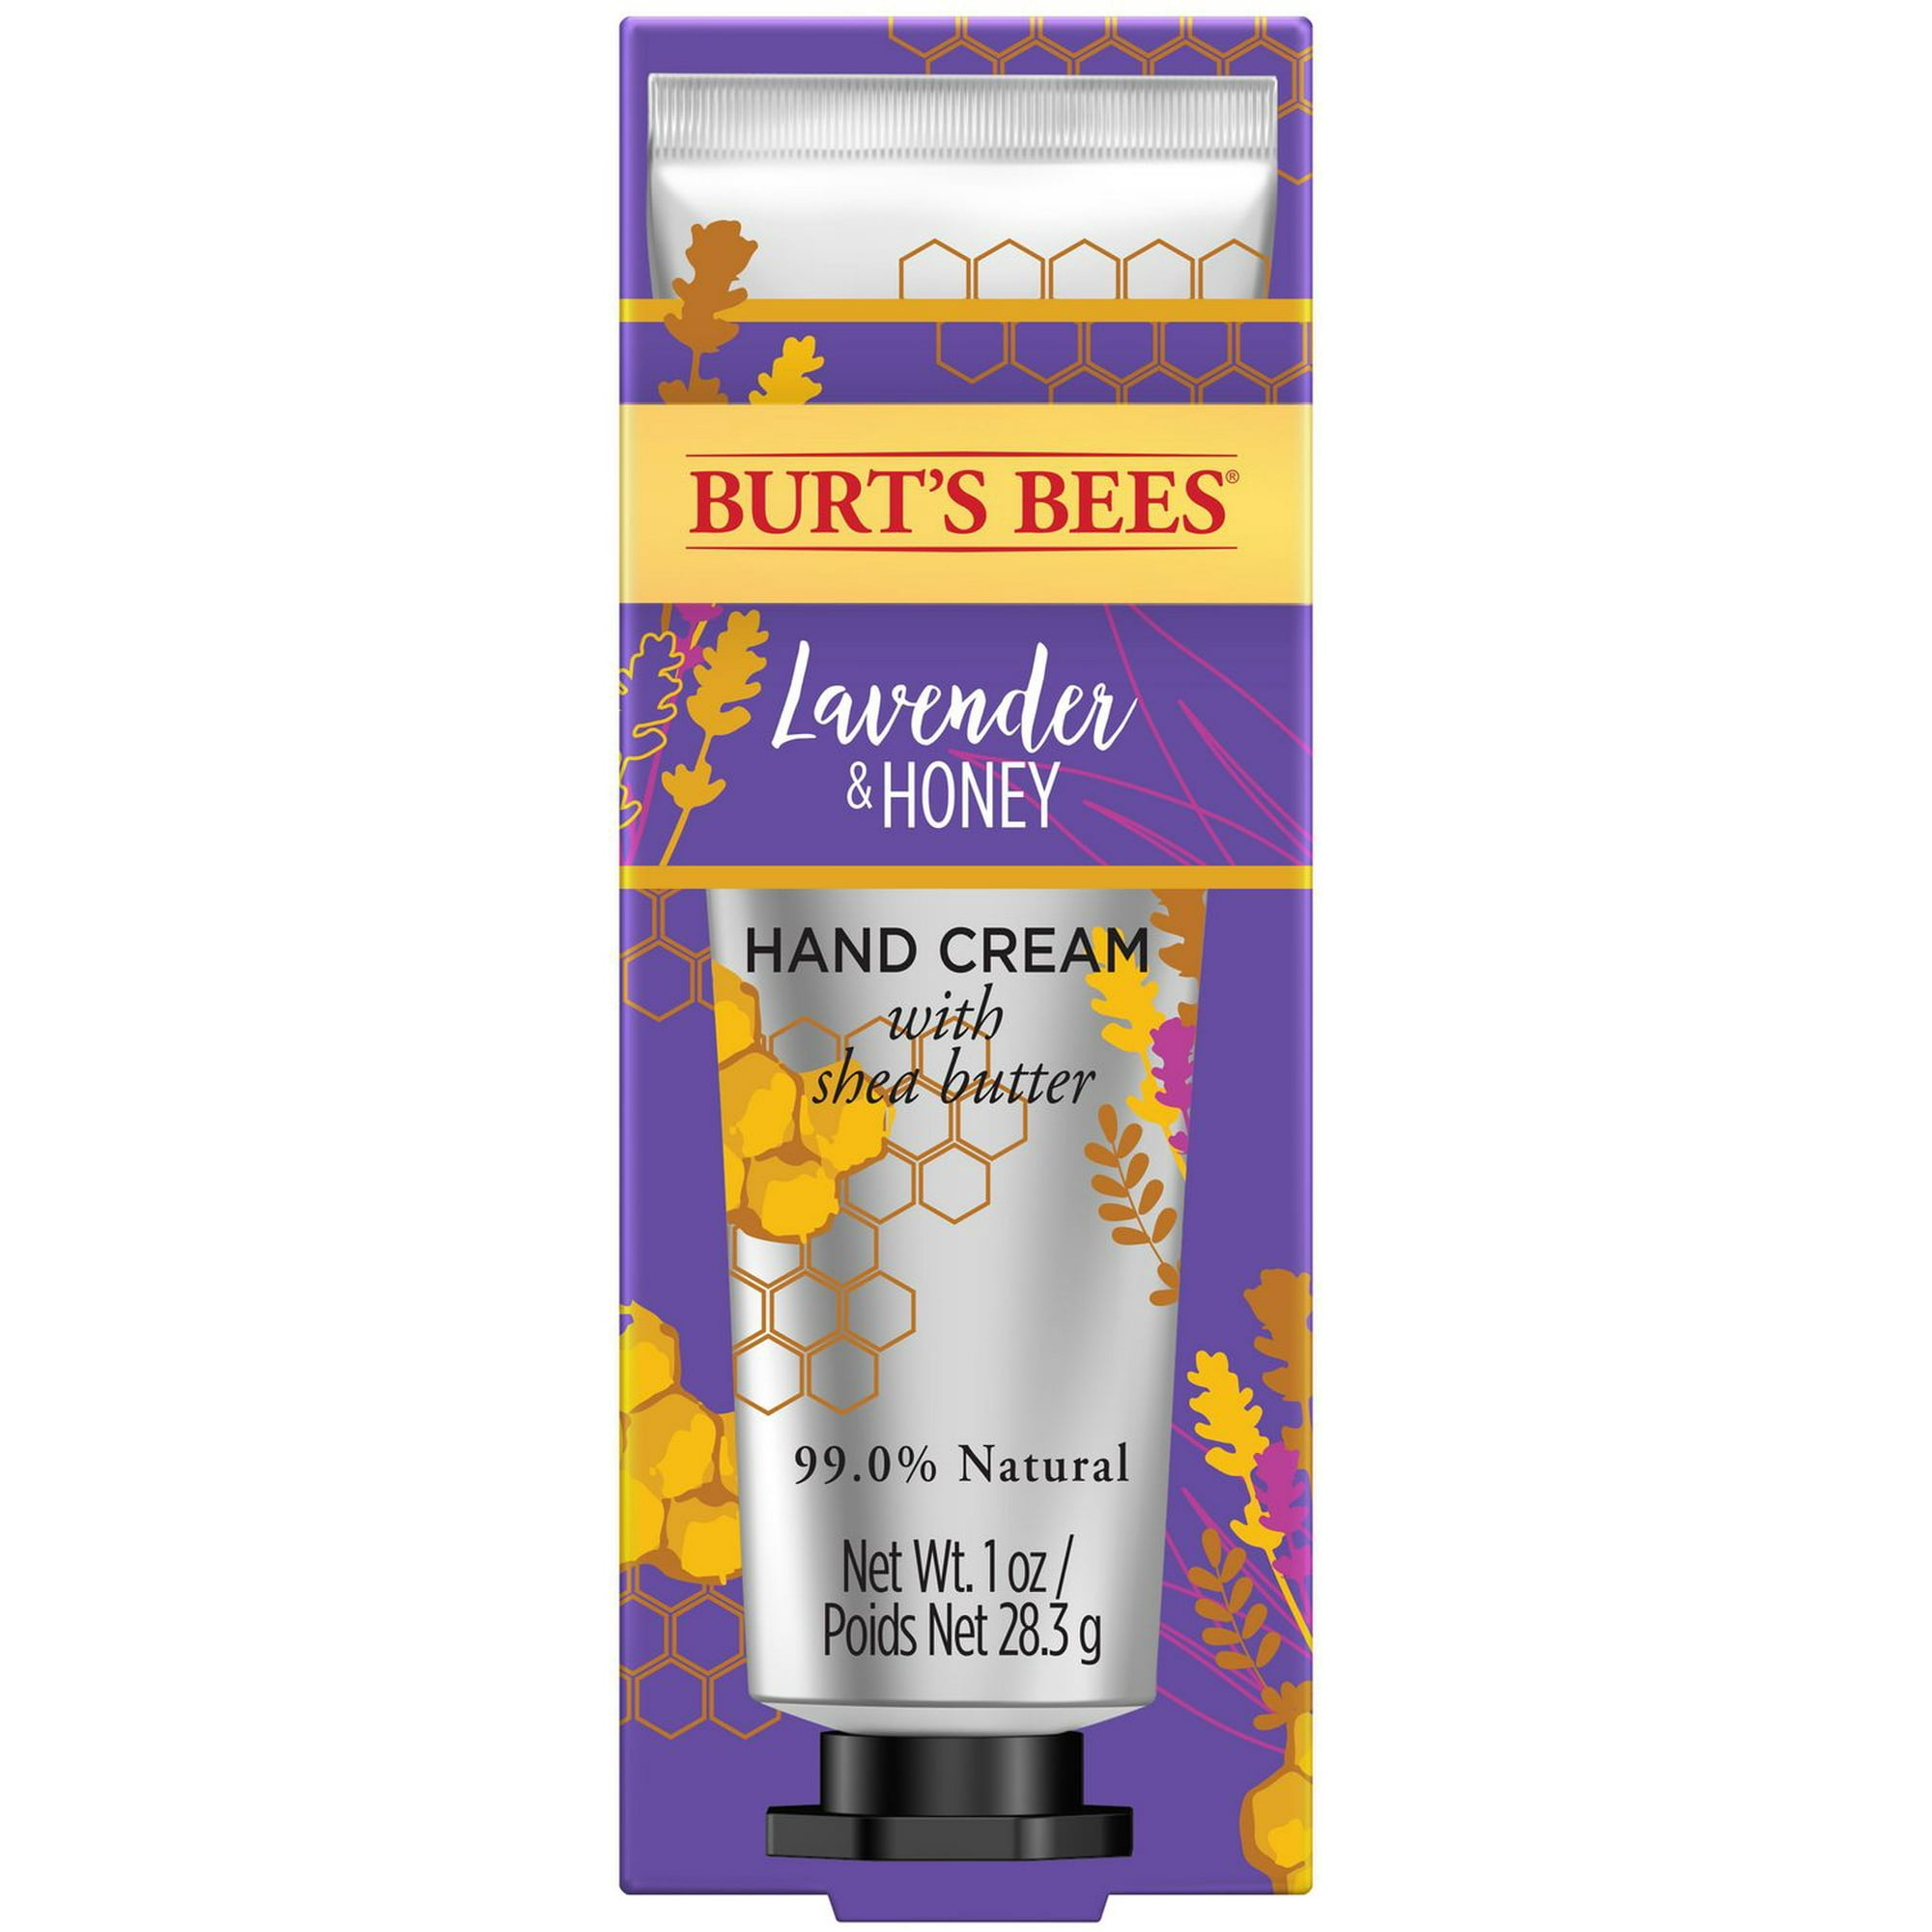 Burt's Bees Hand Cream with Shea Butter, Lavender & Honey, 99